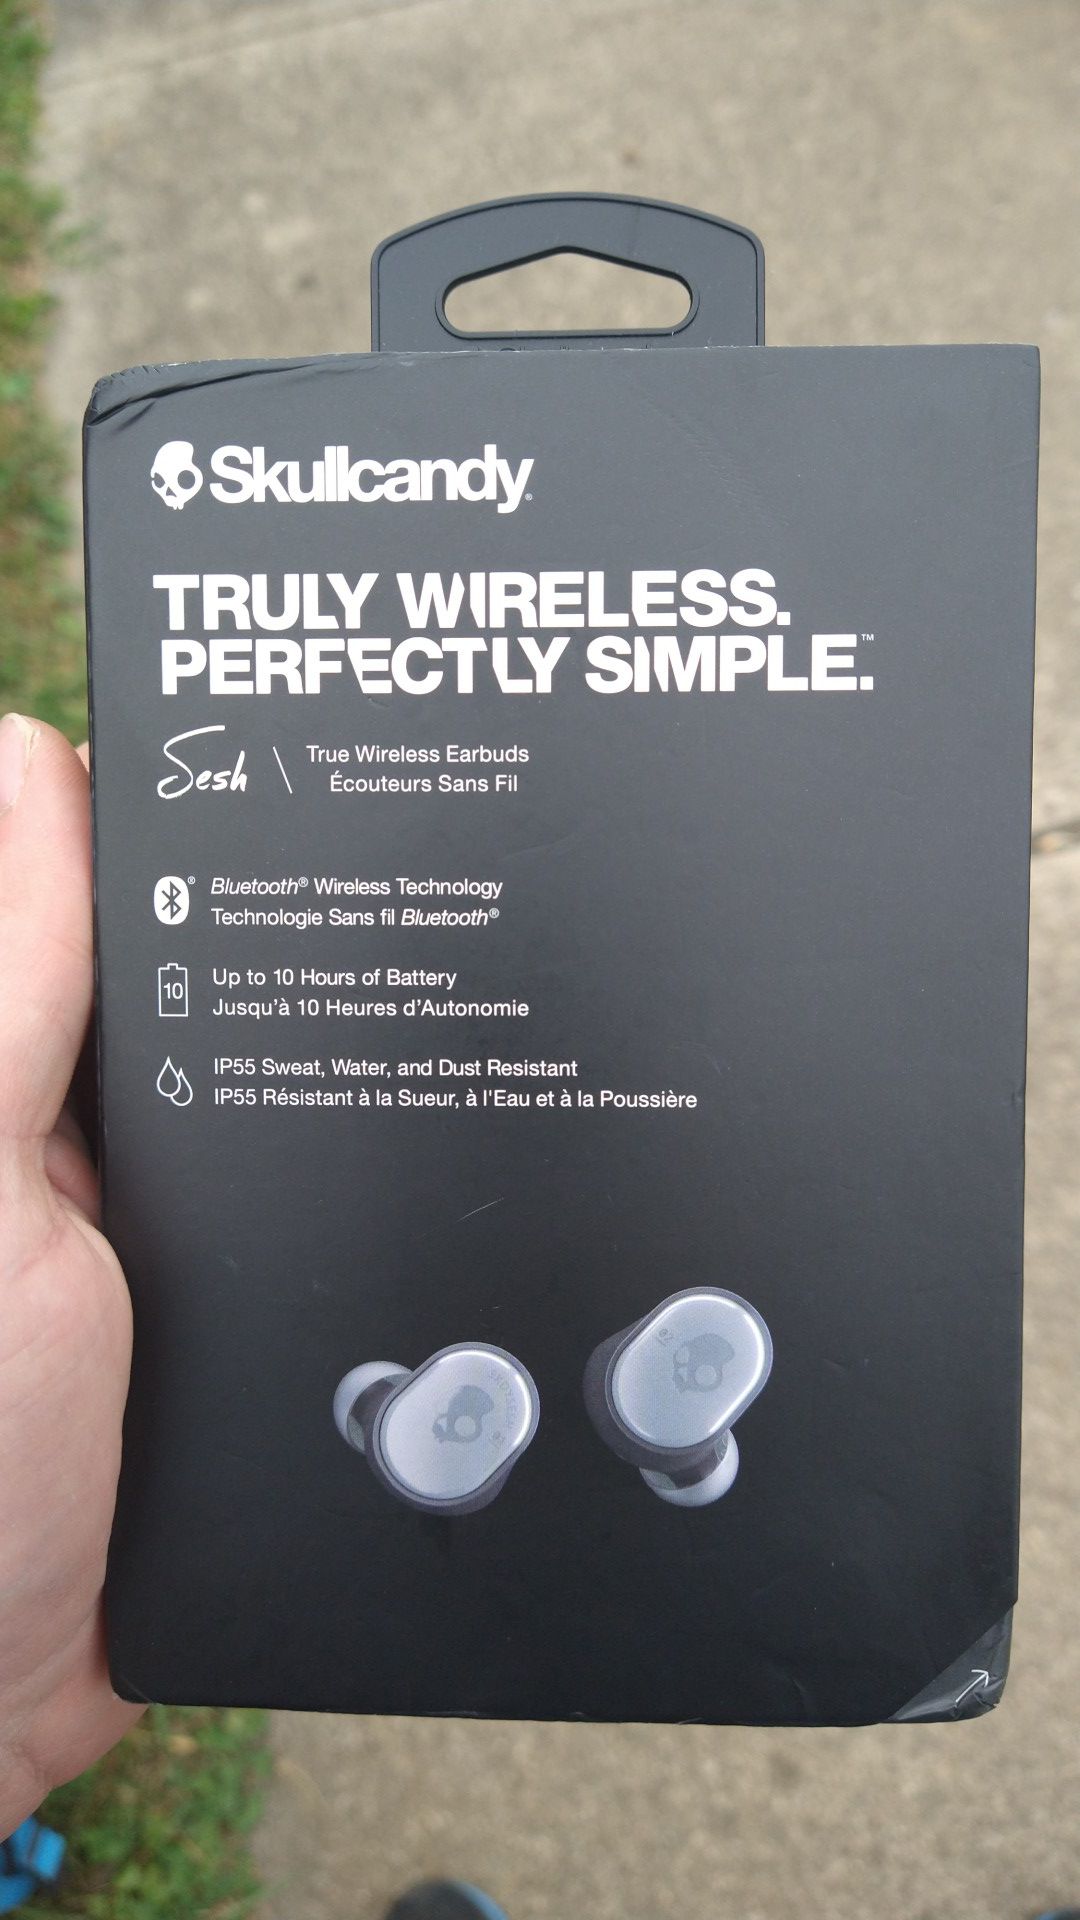 Brand new Skullcandy wireless earbuds!!!